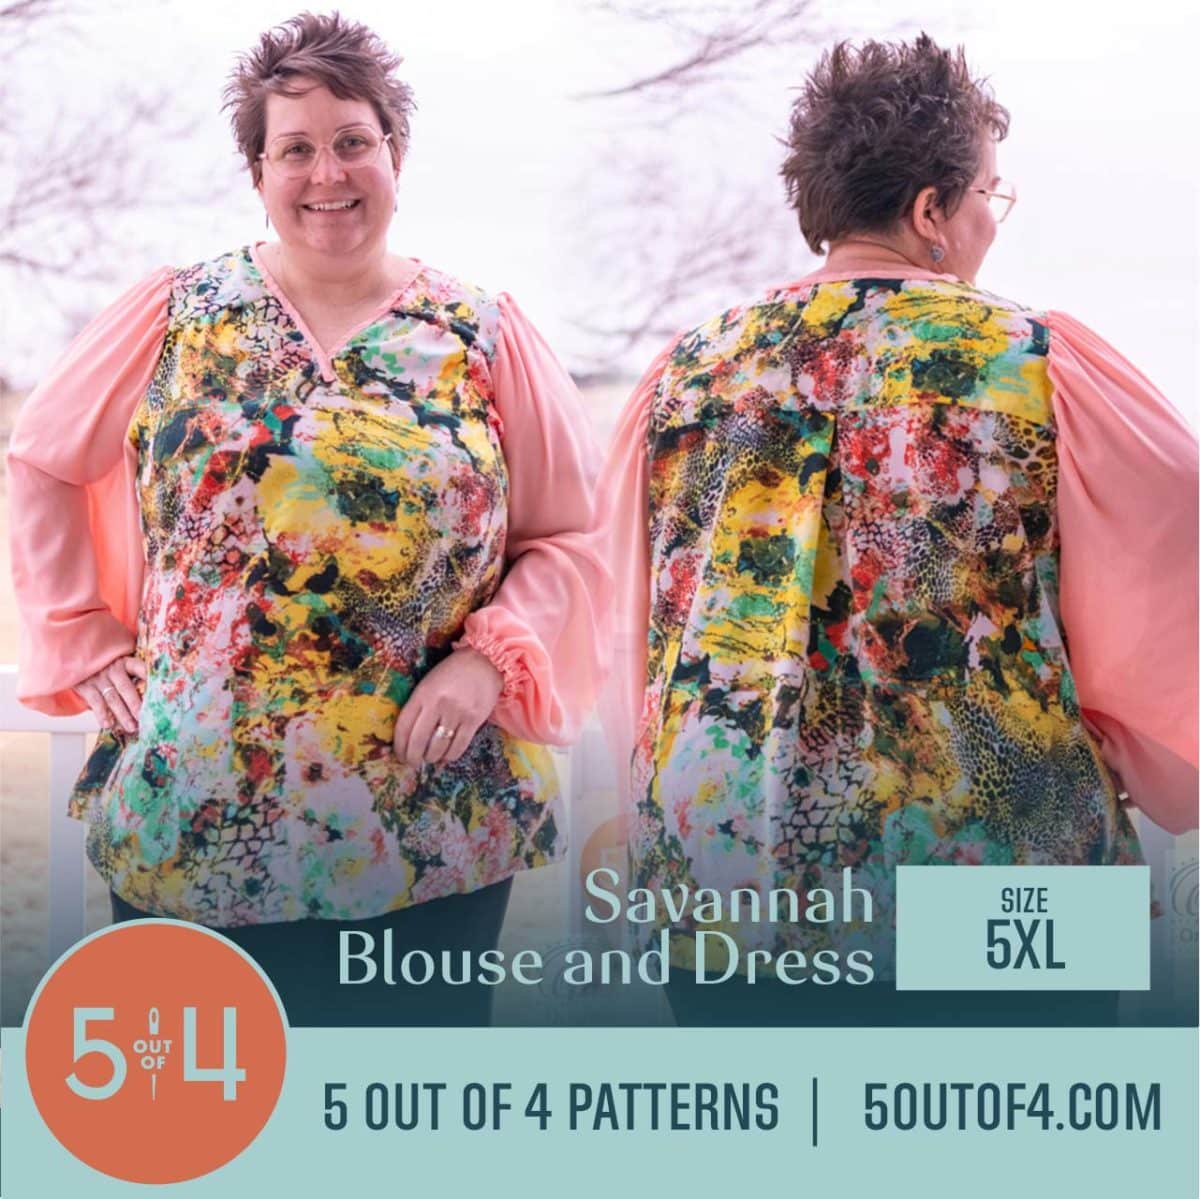 5oo4 Patterns Savannah blouse size 5XL